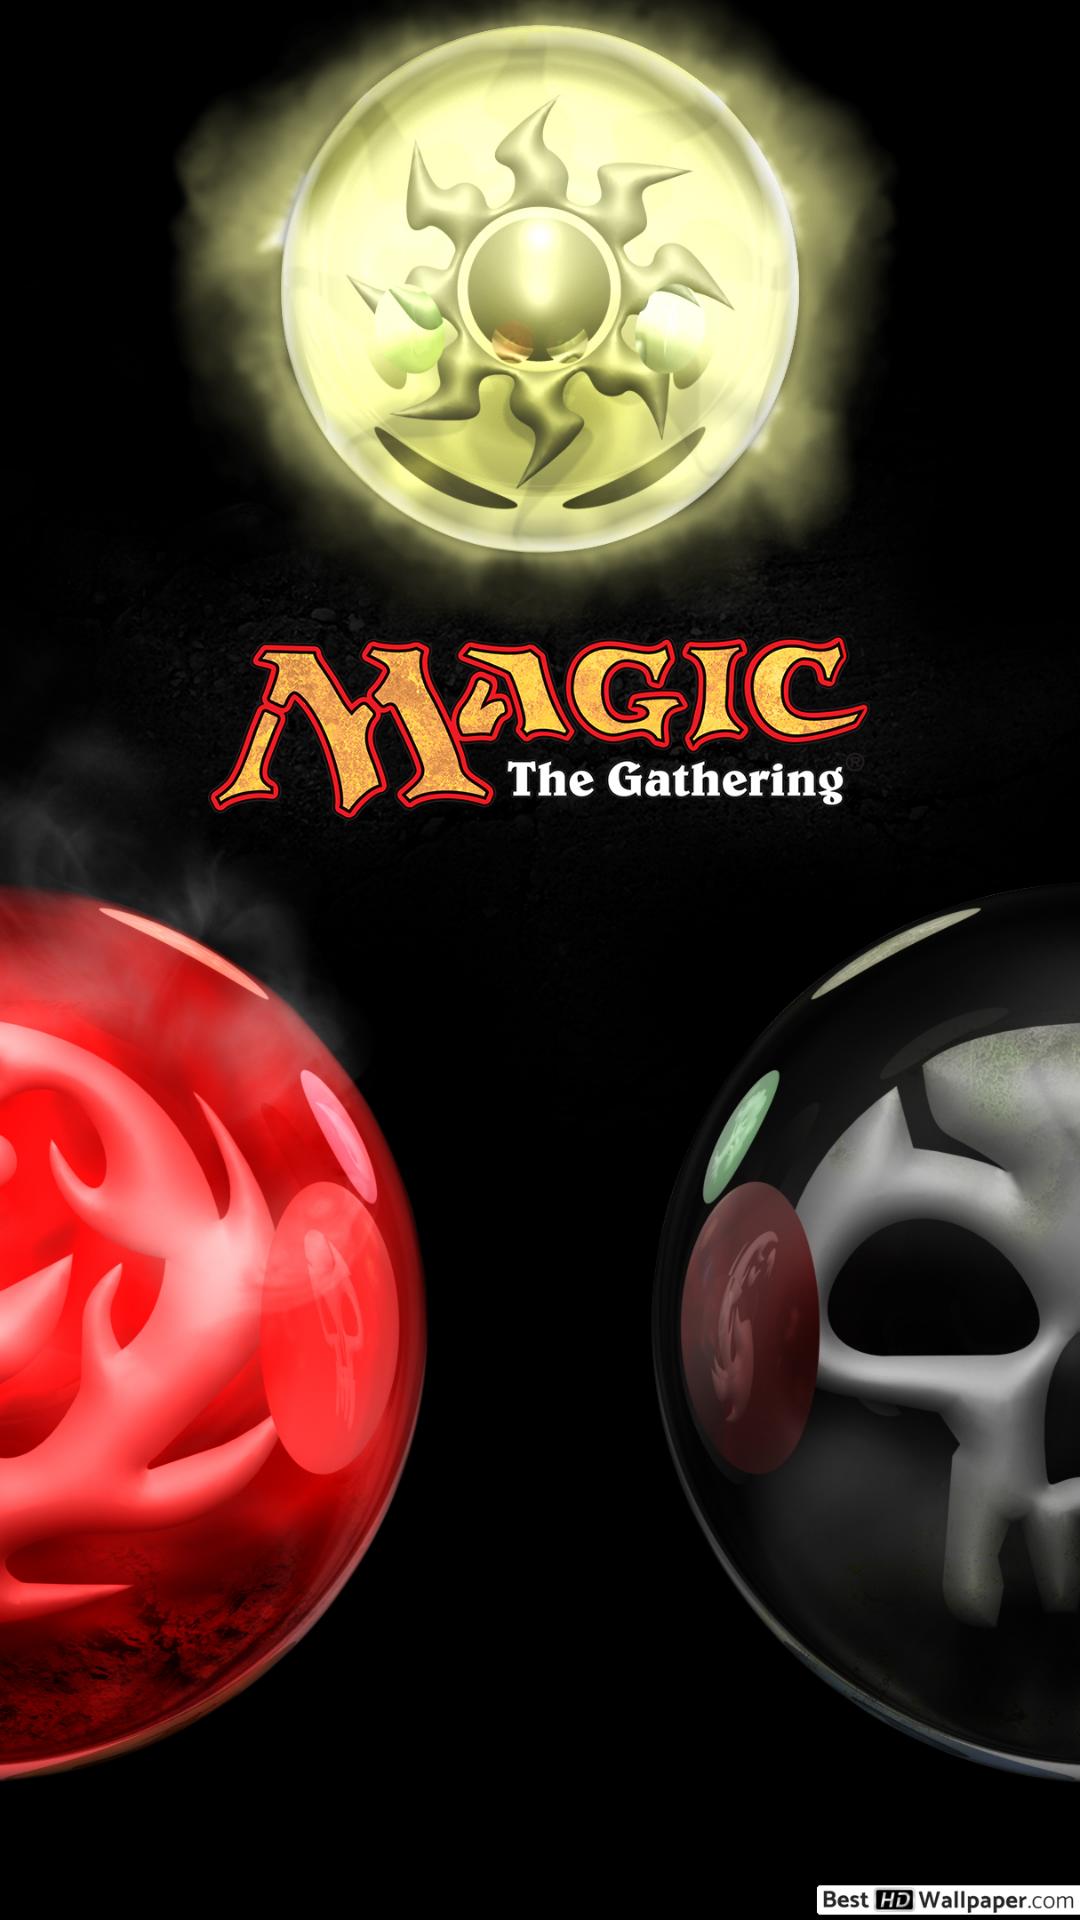 Magic: The Gathering HD wallpaper download